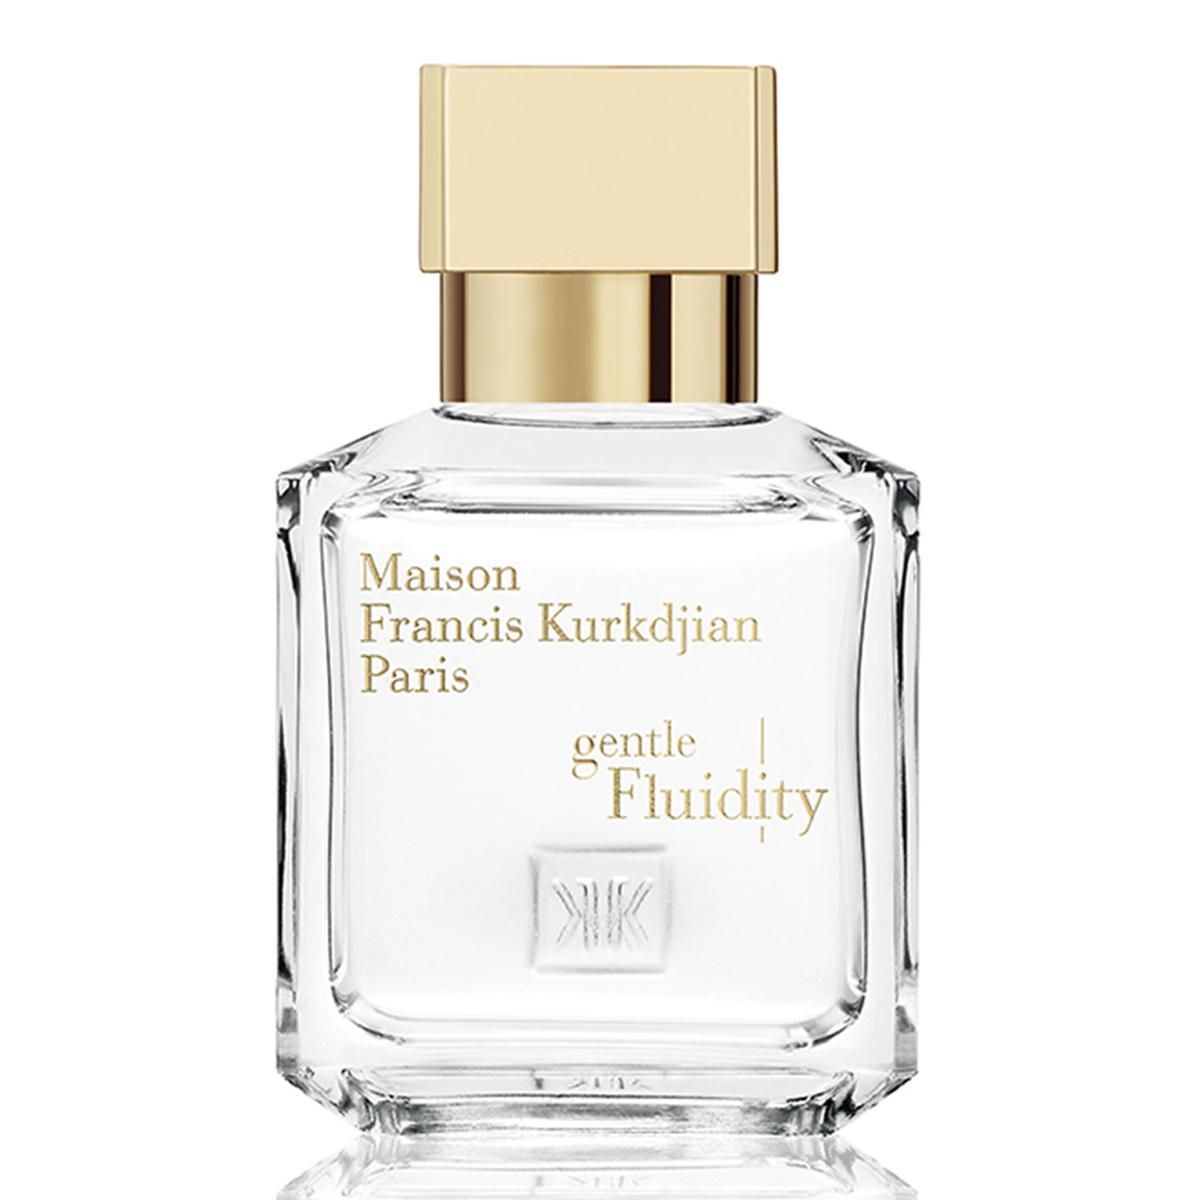 maison francis kurkdjian gentle fluidity gold eau de parfum